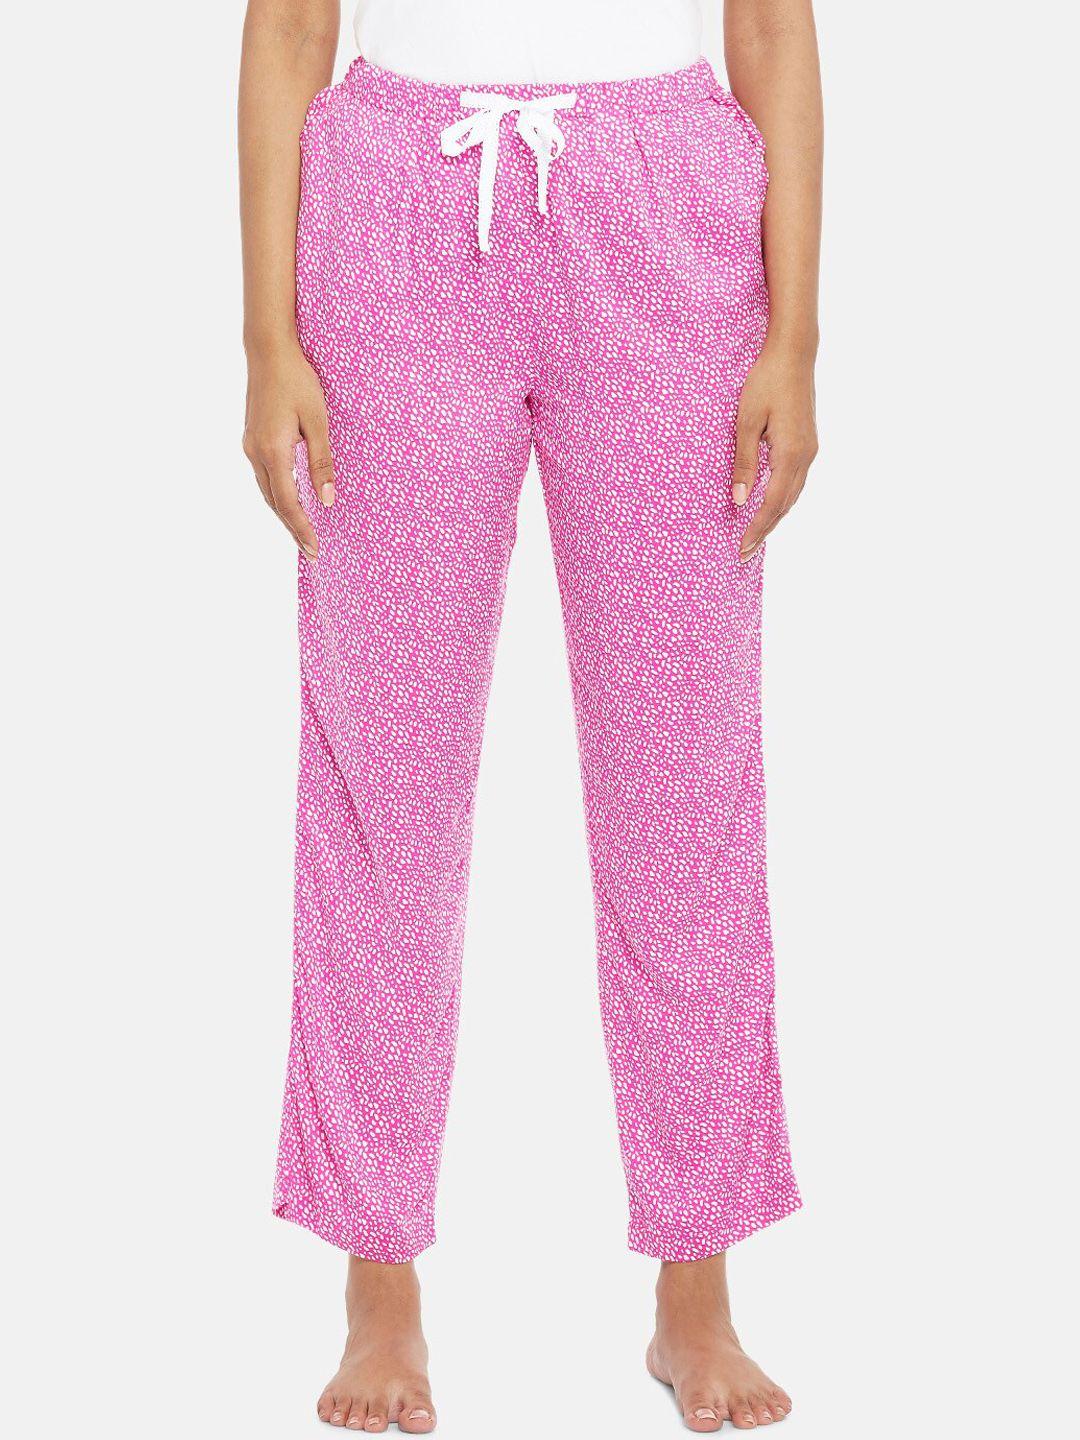 dreamz by pantaloons women fuchsia printed pyjamas